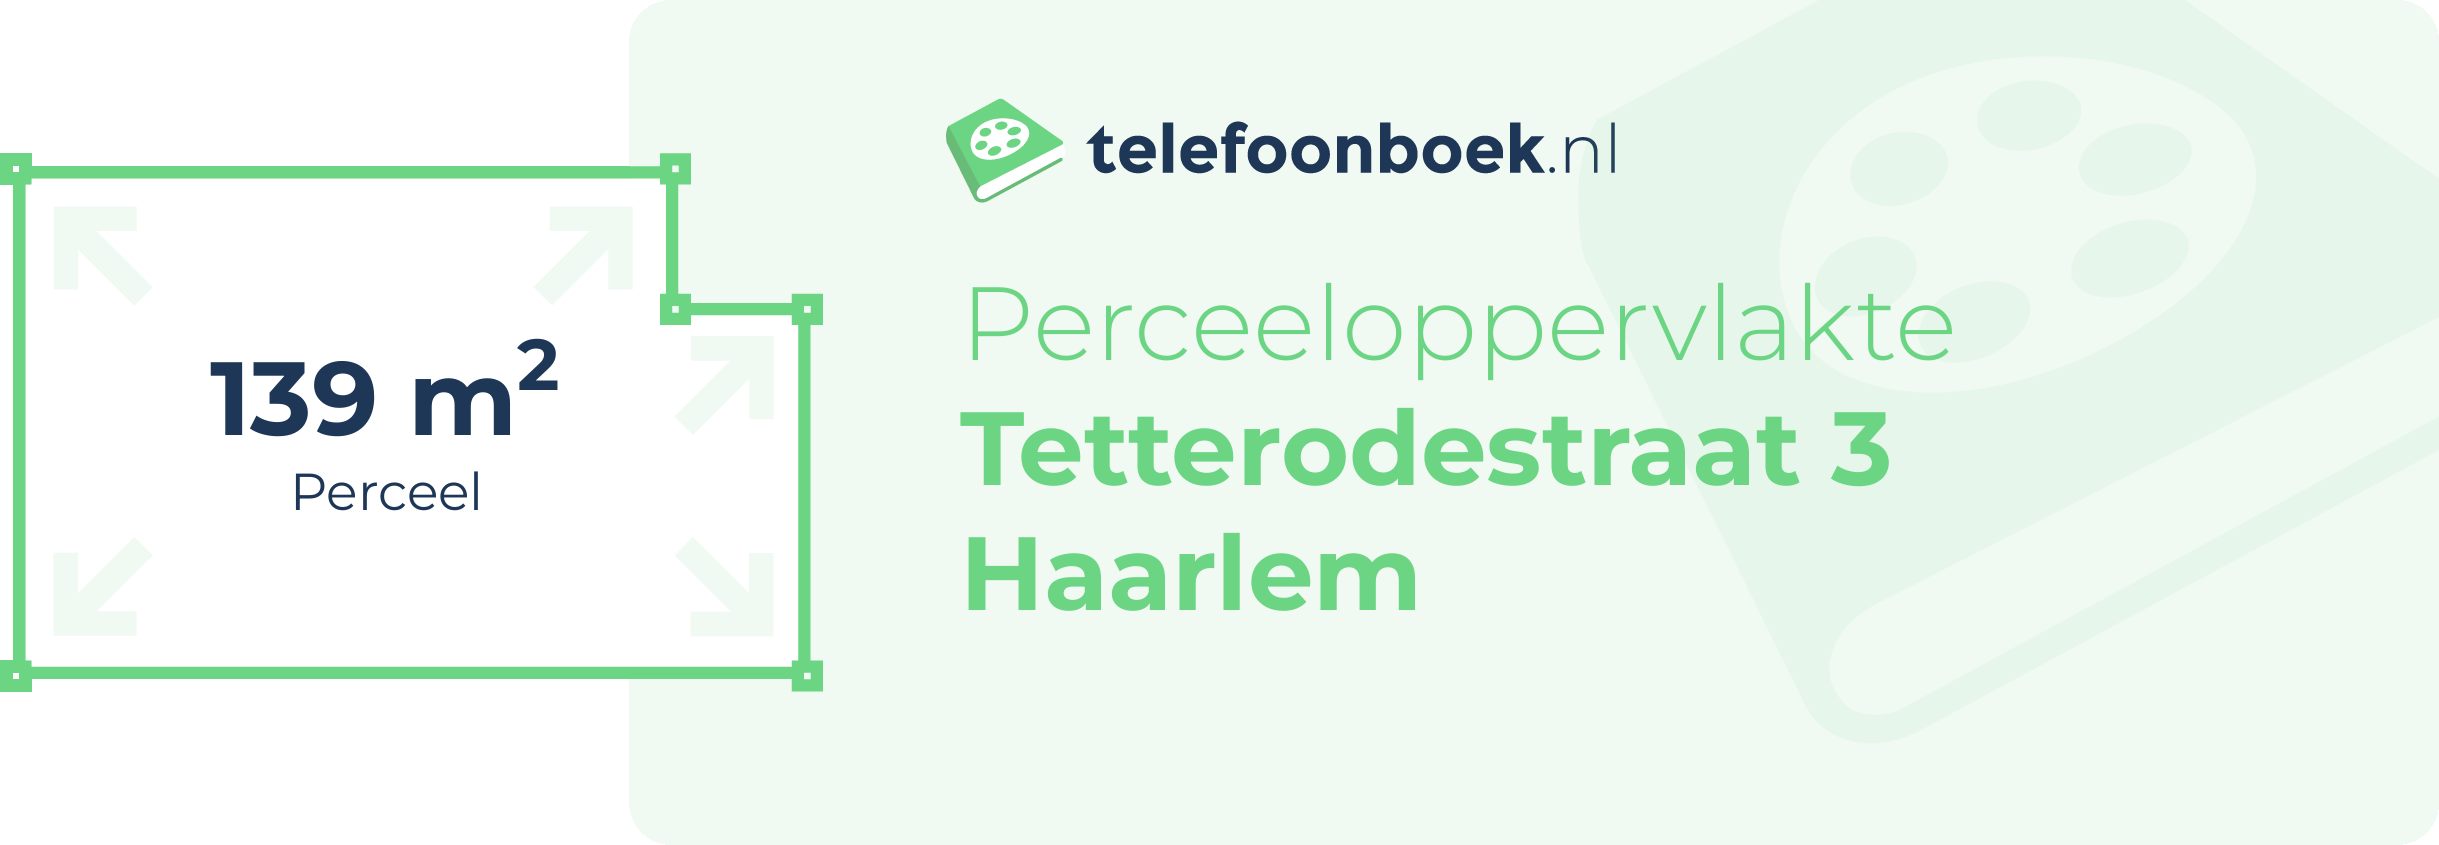 Perceeloppervlakte Tetterodestraat 3 Haarlem